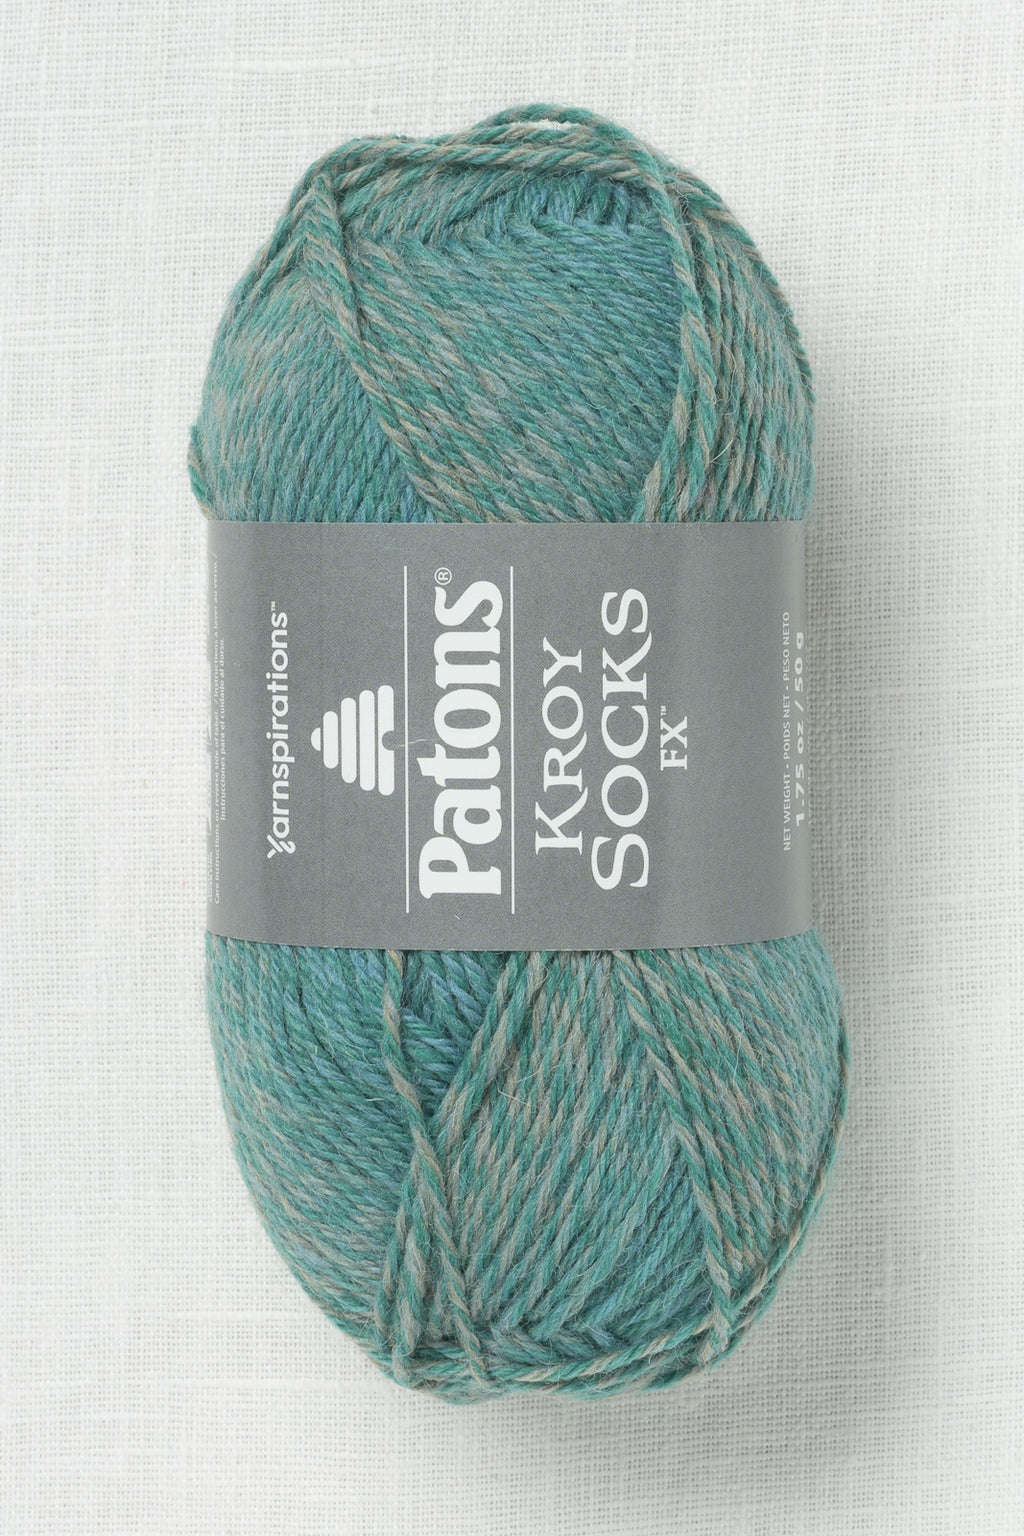 Patons Kroy Socks Cascade Colors